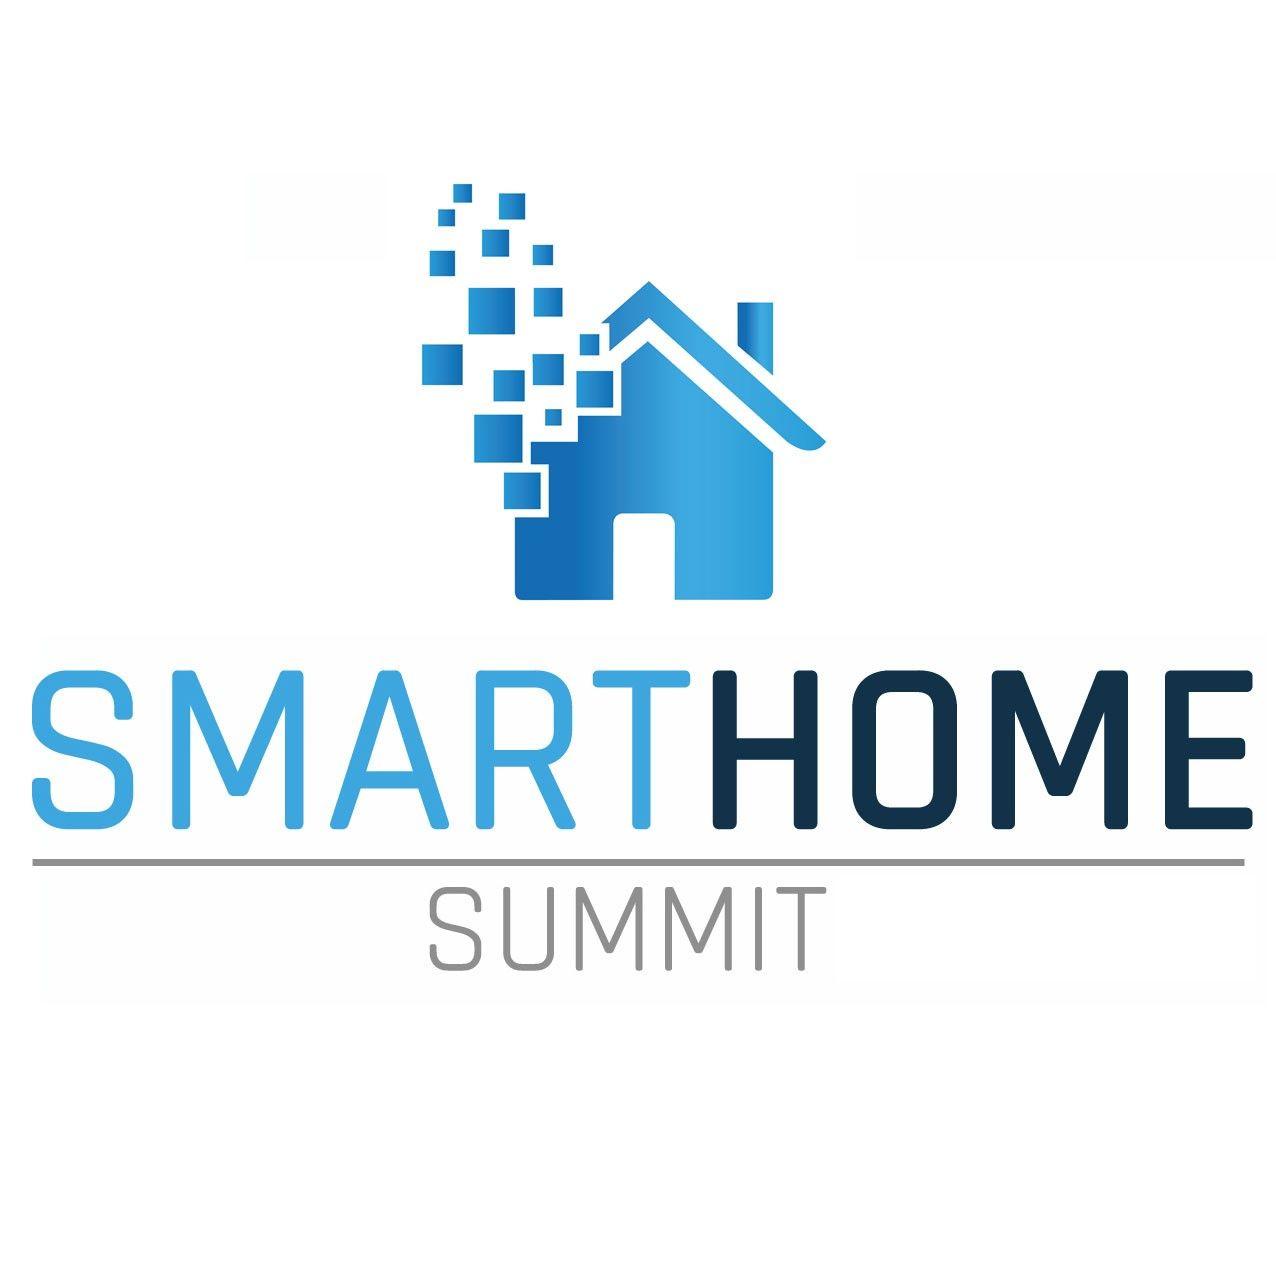 Samsung Smart Home Logo - Smart home summit - Unusual house design